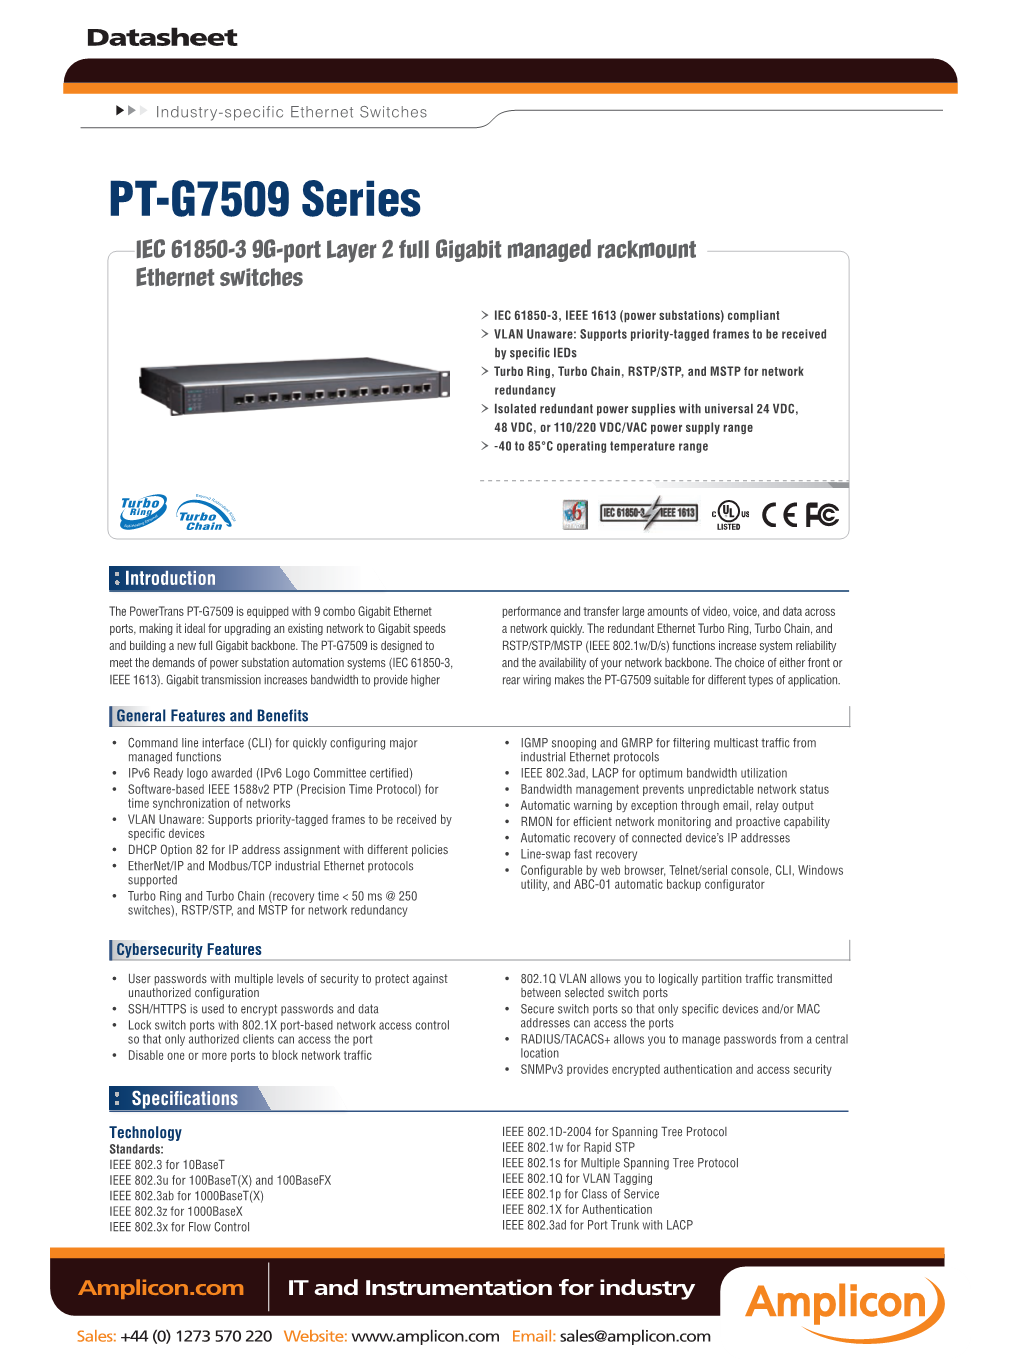 PT-G7509 Series IEC 61850-3 9G-Port Layer 2 Full Gigabit Managed Rackmount Ethernet Switches